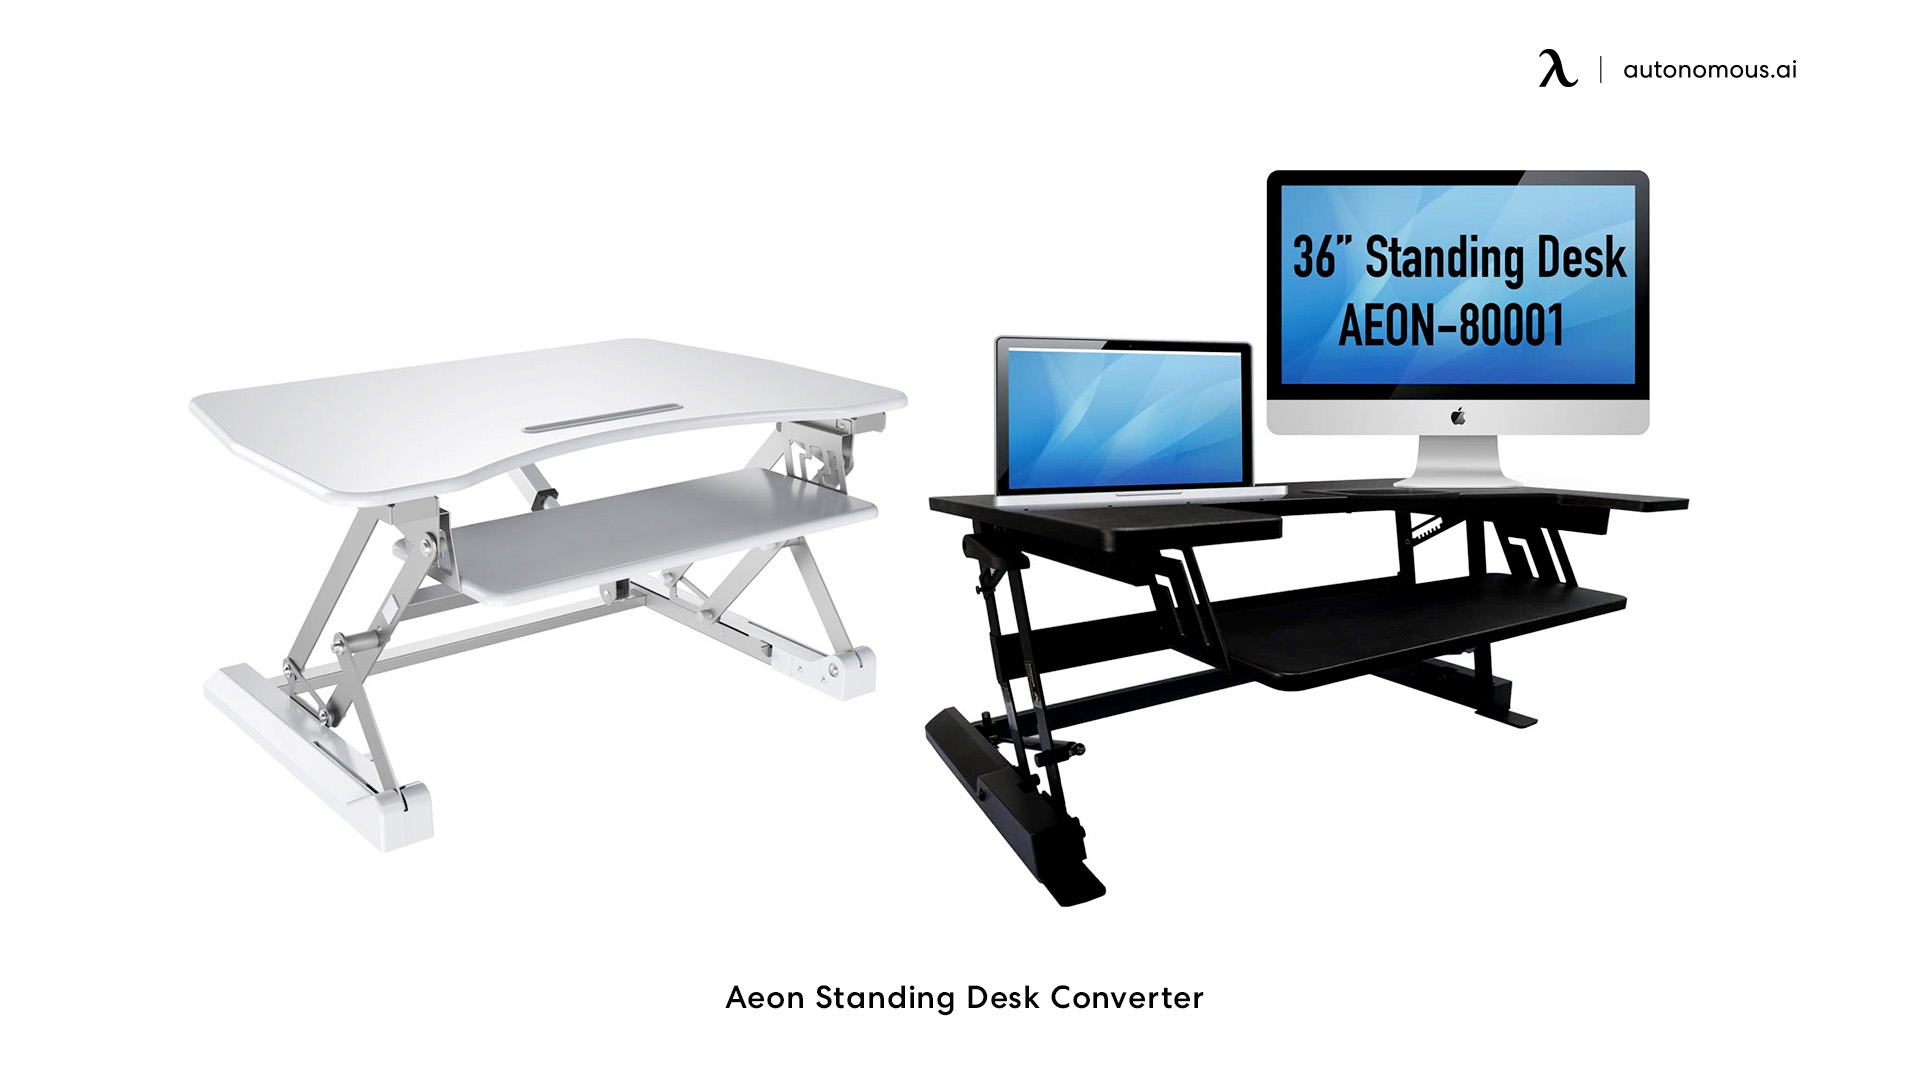 Aeon Standing Desk Converter